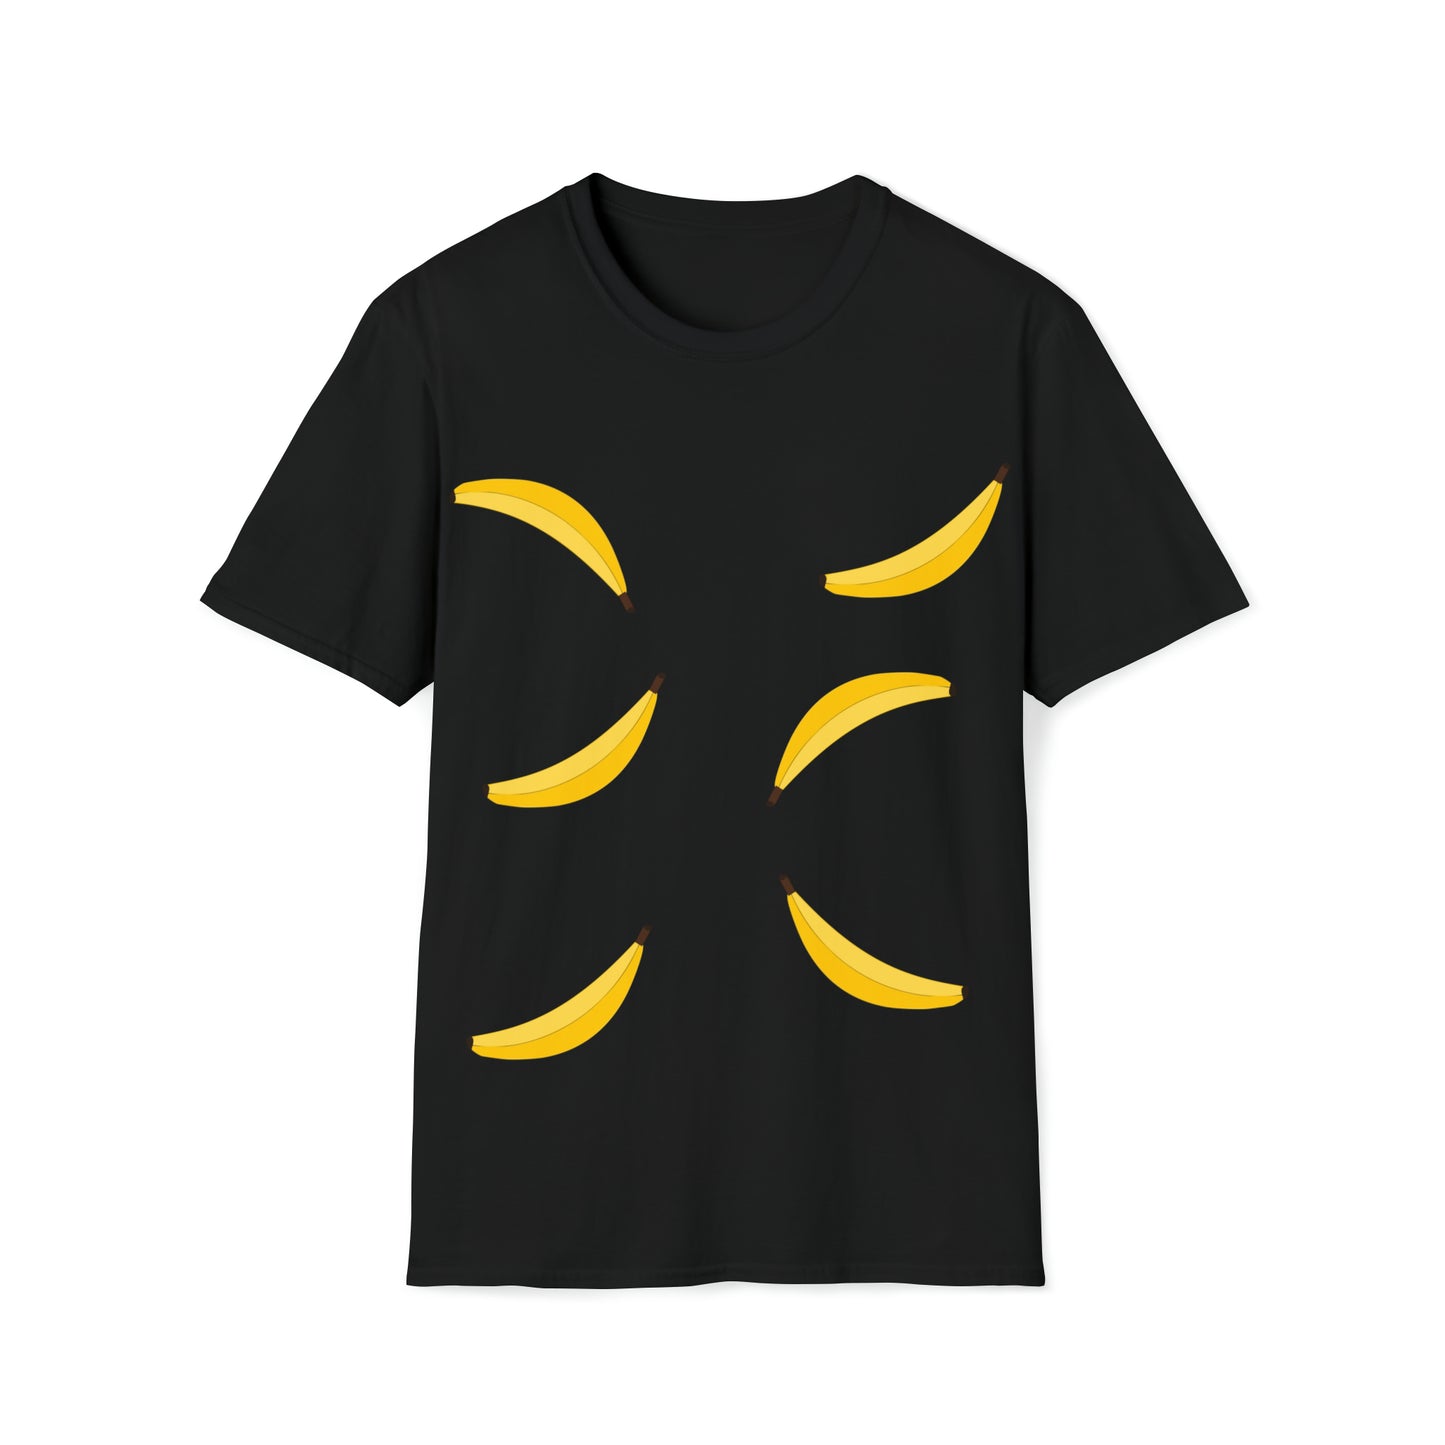 Going Bananas T-shirt